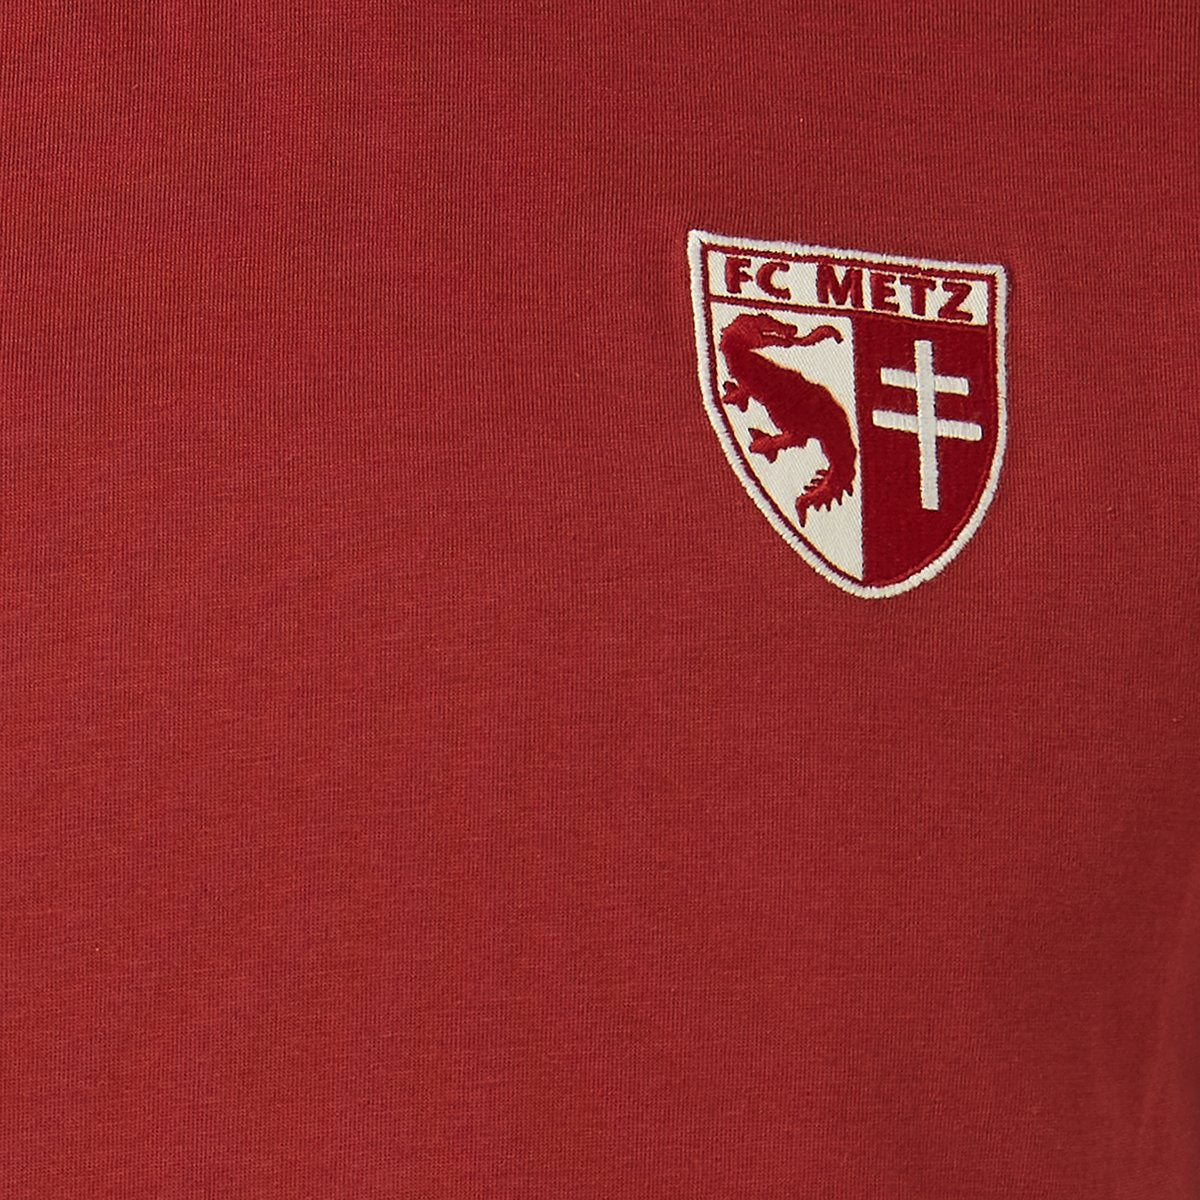 Camiseta Algardi Fc Metz Rojo Hombre - Imagen 3